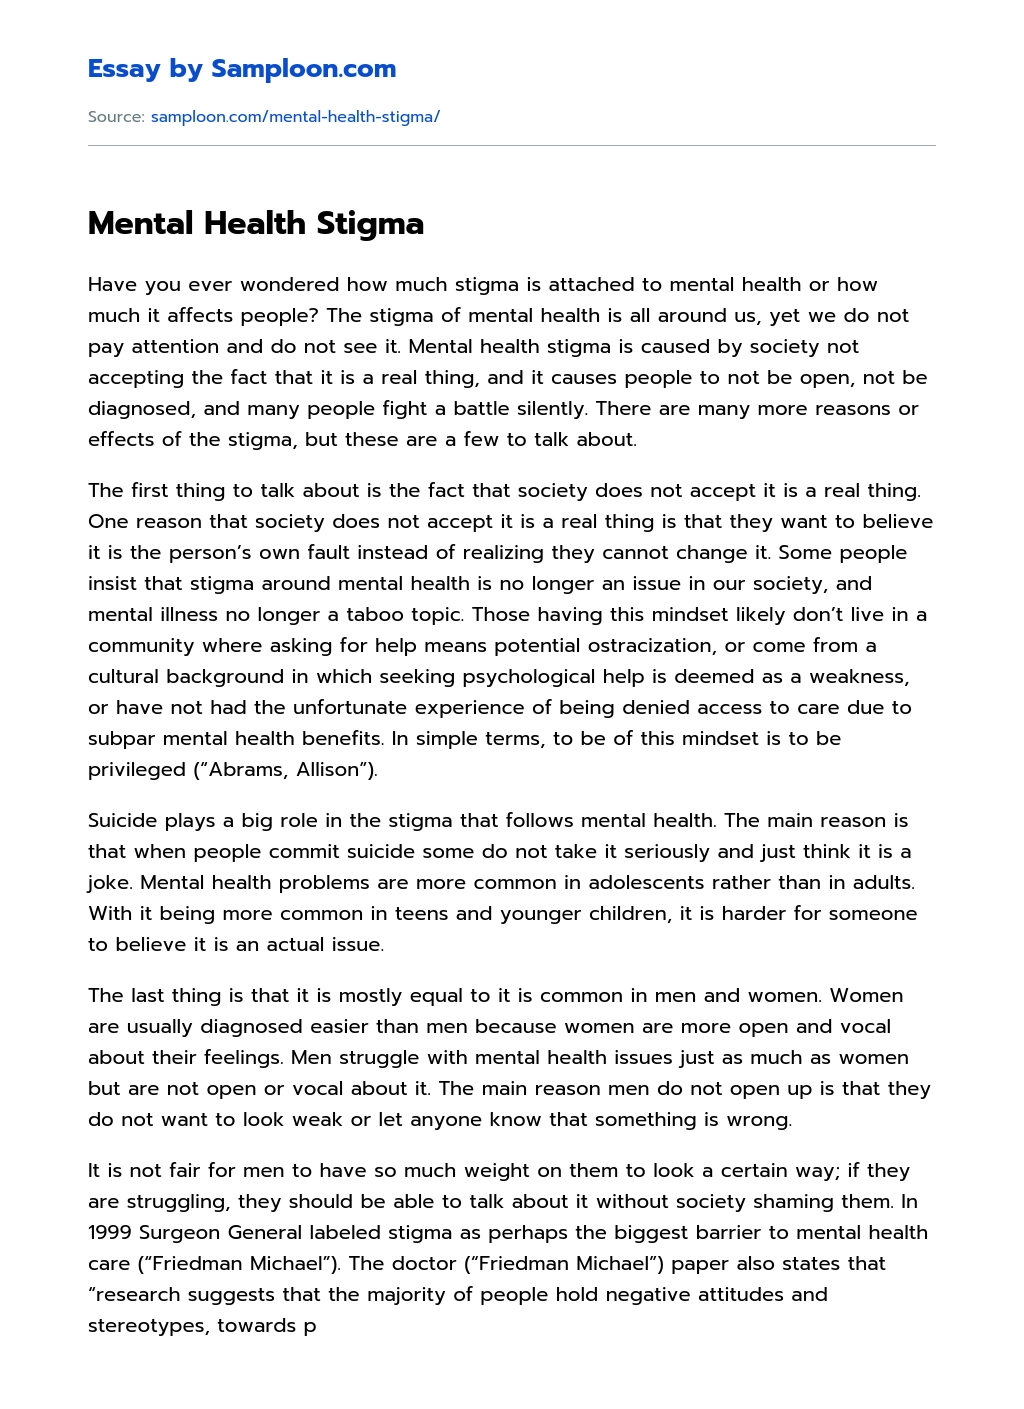 Mental Health Stigma essay